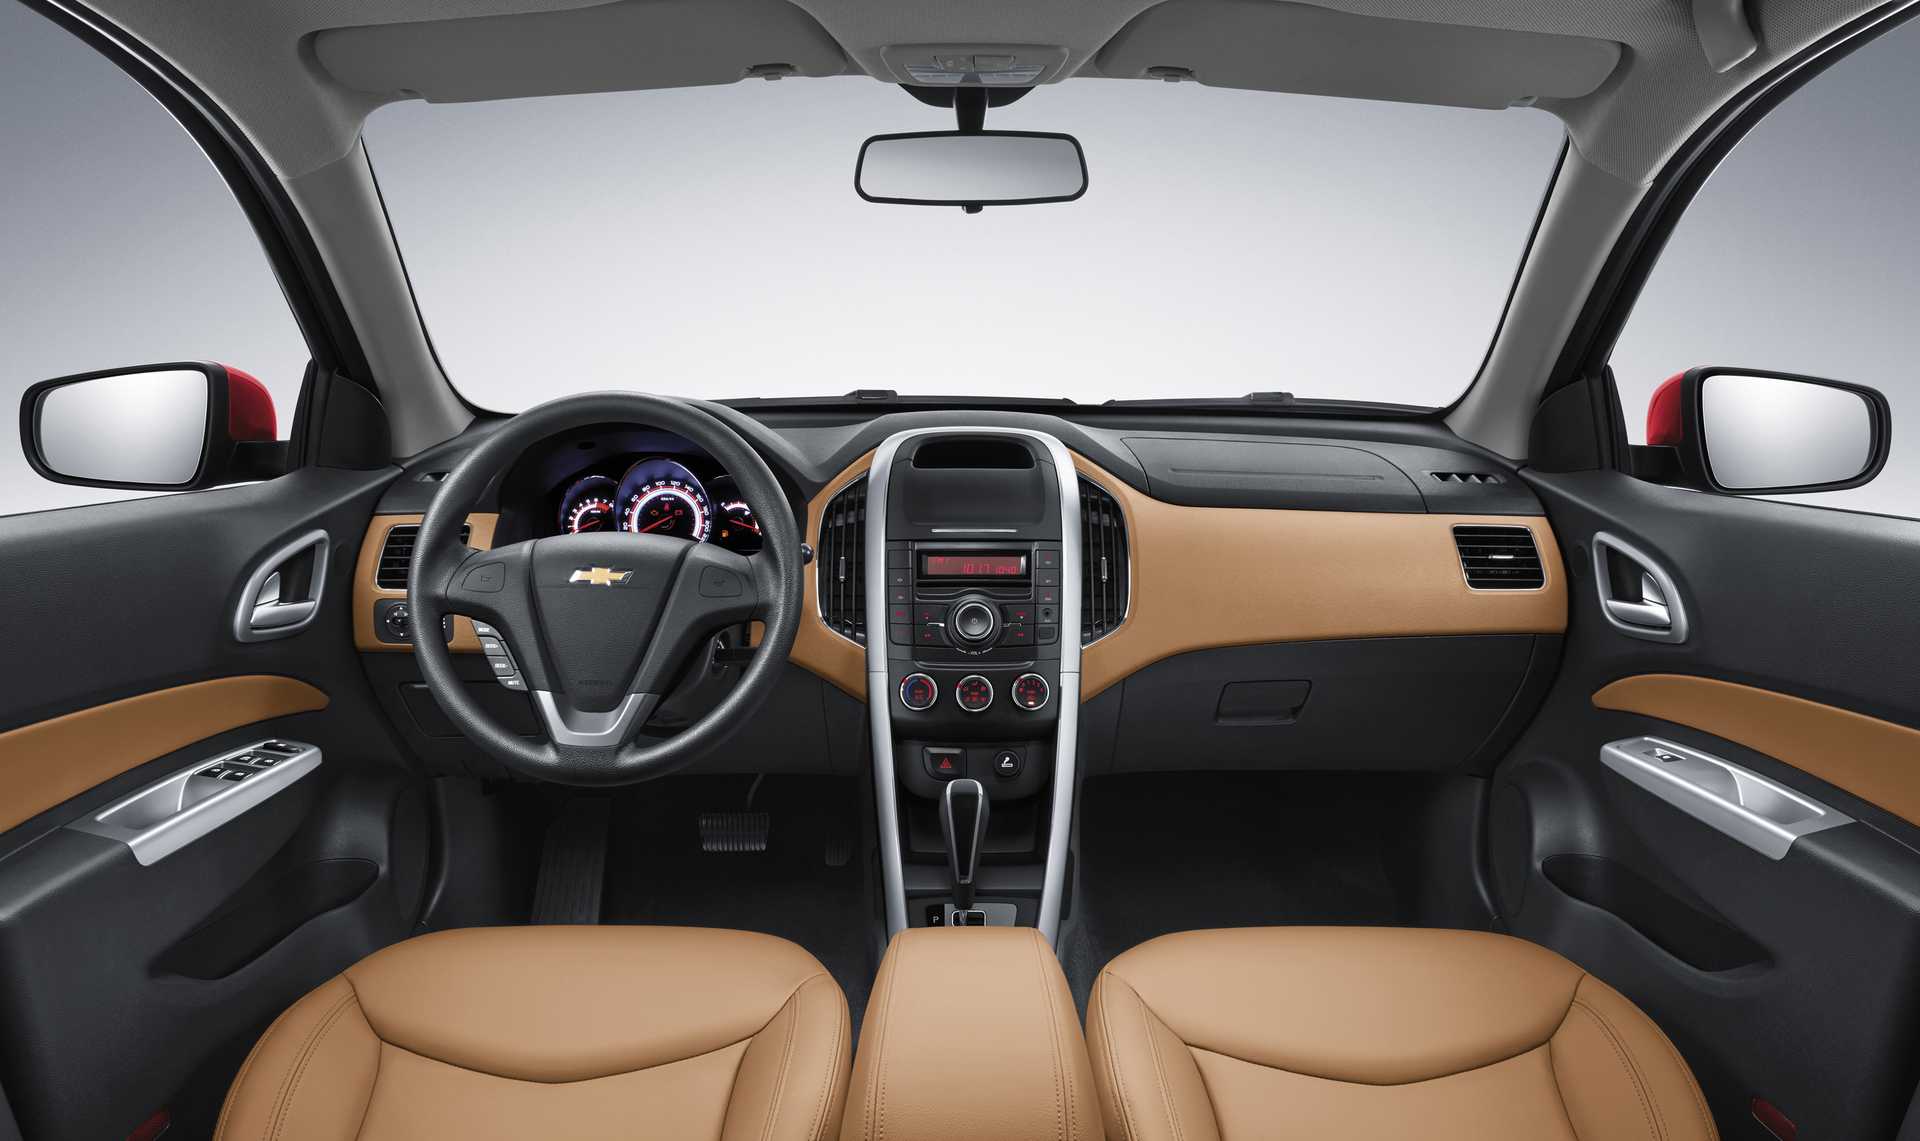 Chevrolet Optra interior - Cockpit